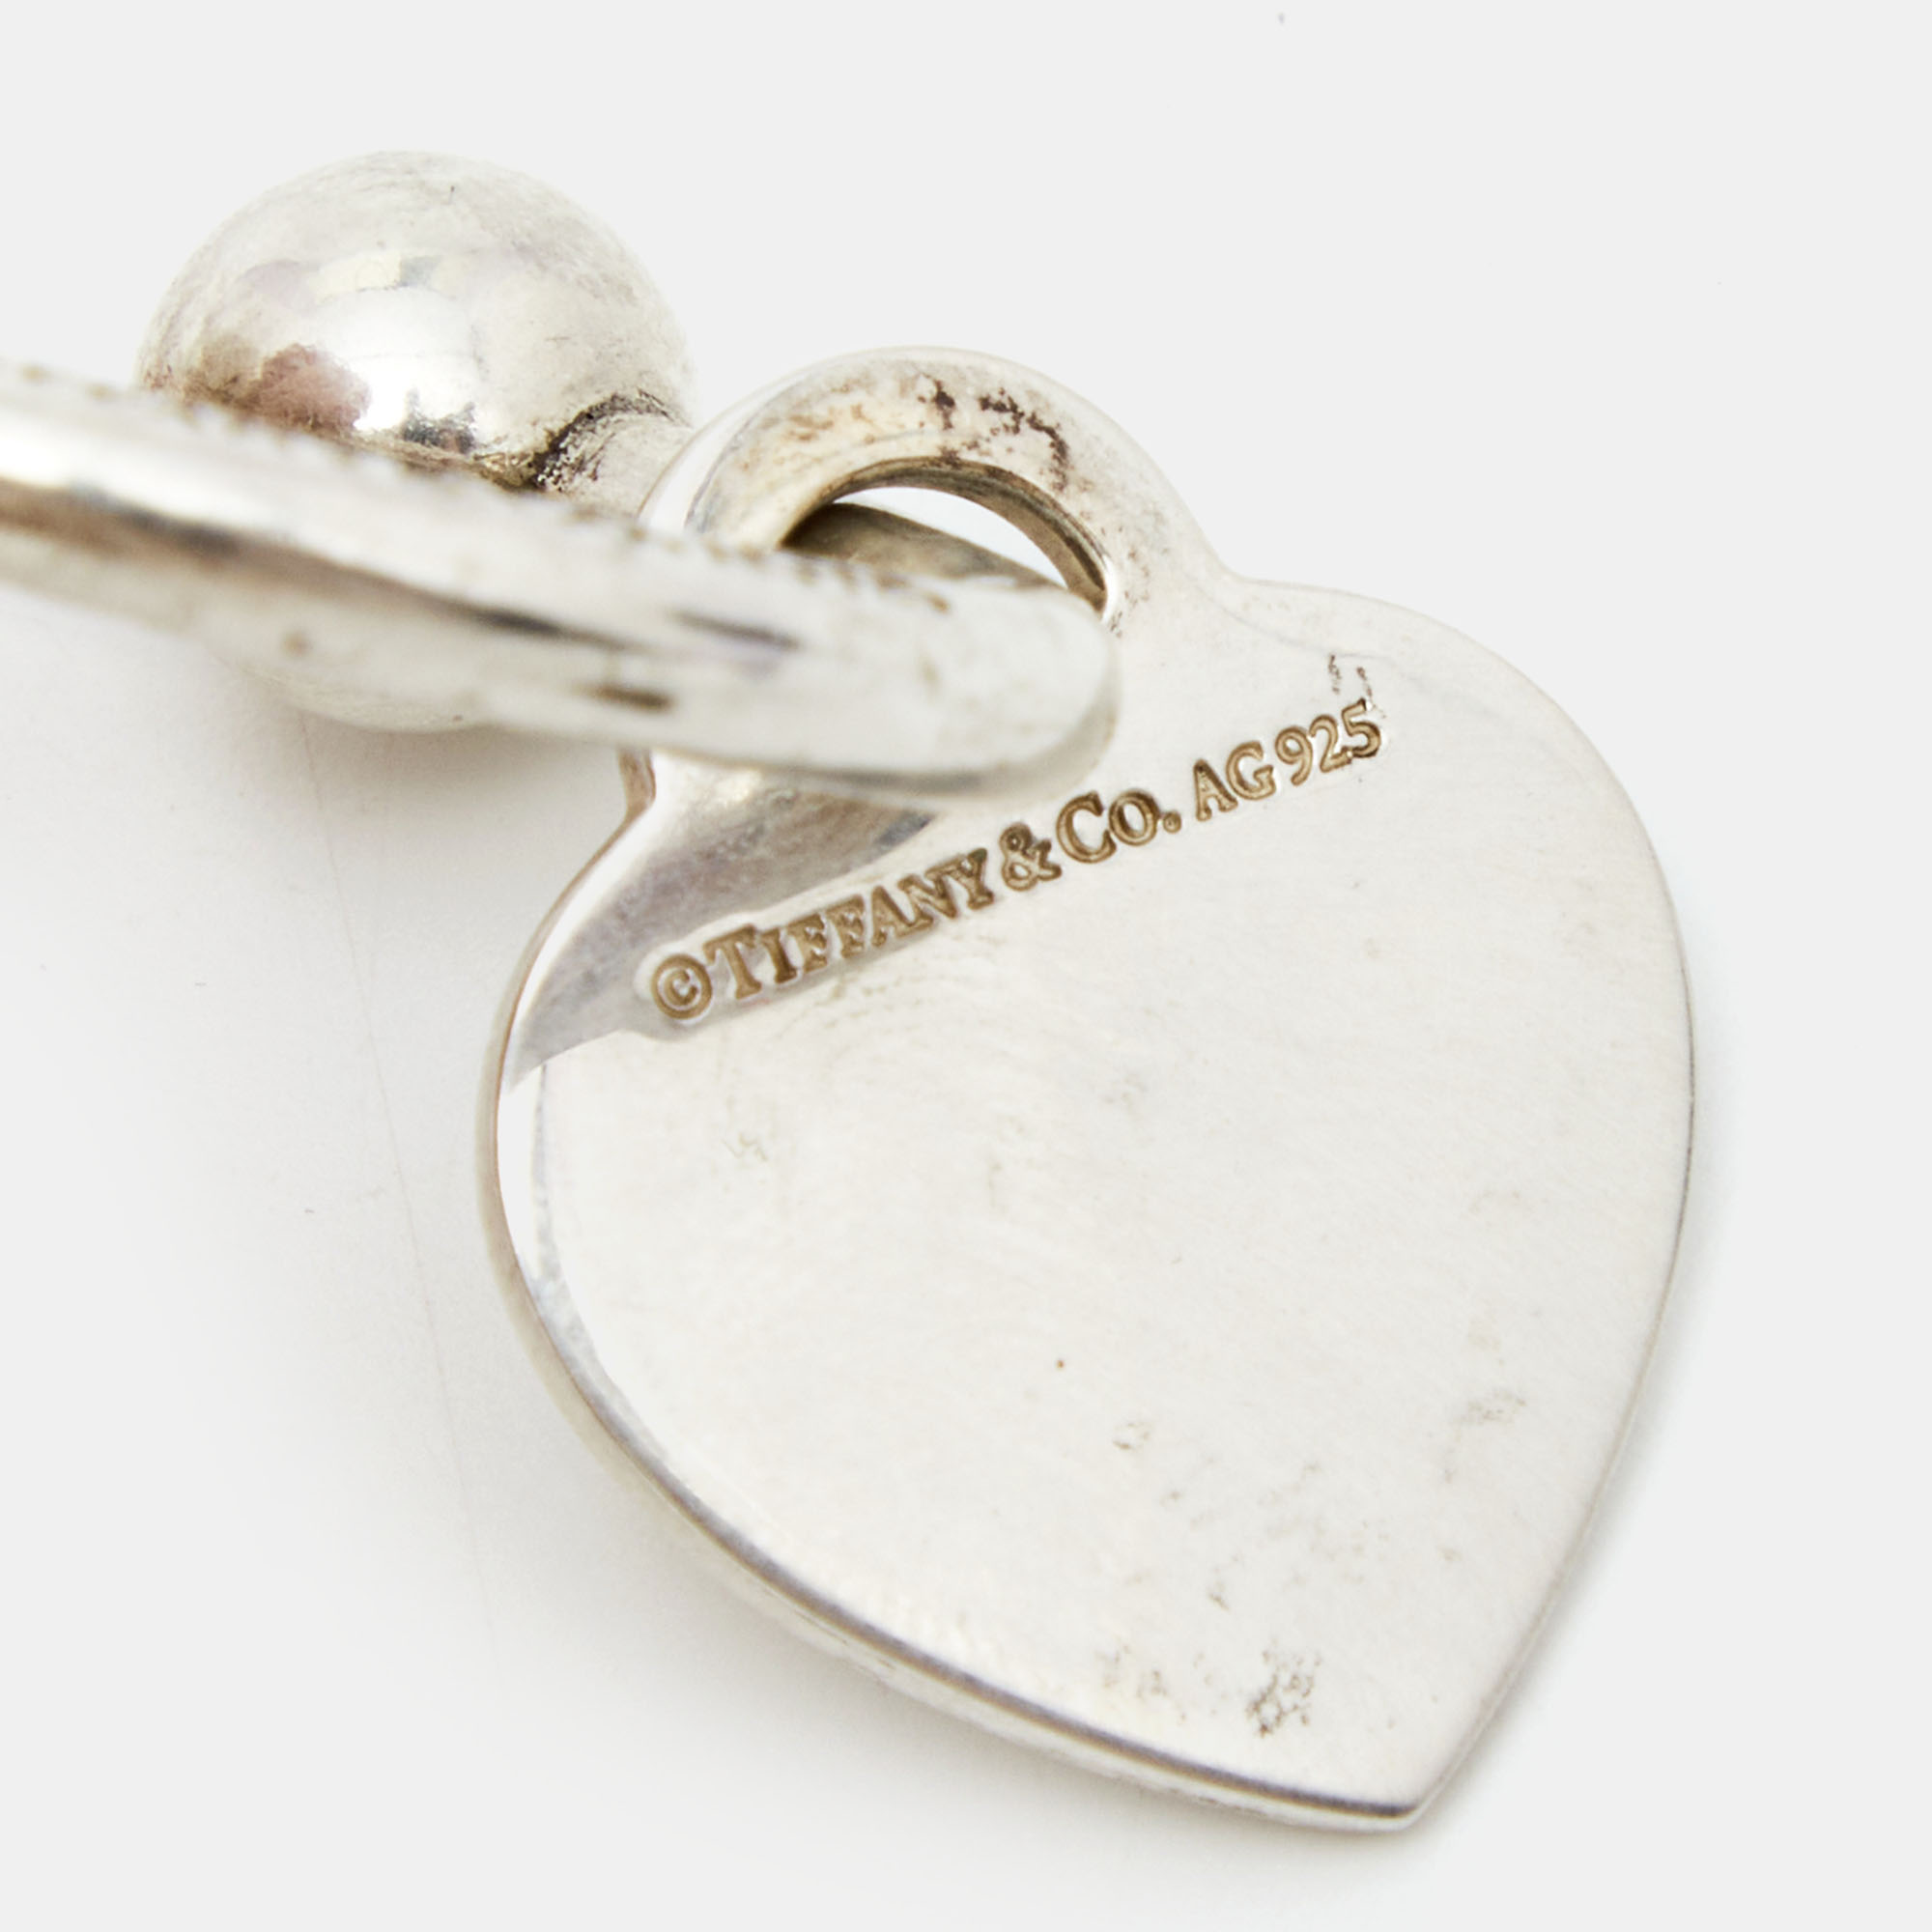 Tiffany & Co. Return To Tiffany Enamel Heart Tag Sterling Silver Key Ring